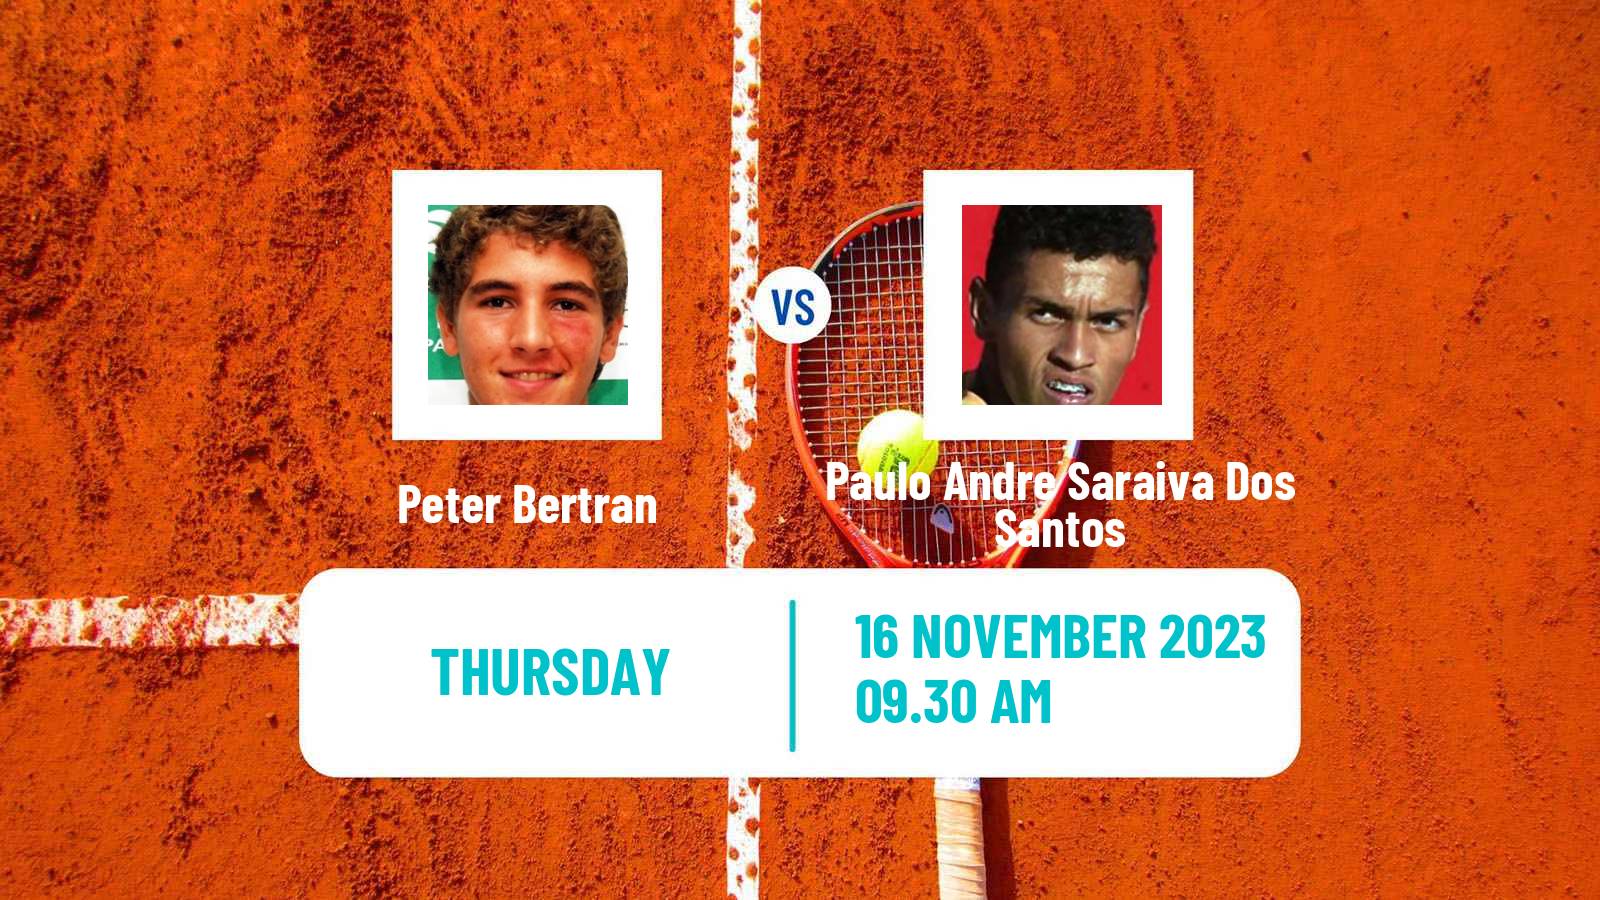 Tennis ITF M15 Santo Domingo 3 Men Peter Bertran - Paulo Andre Saraiva Dos Santos